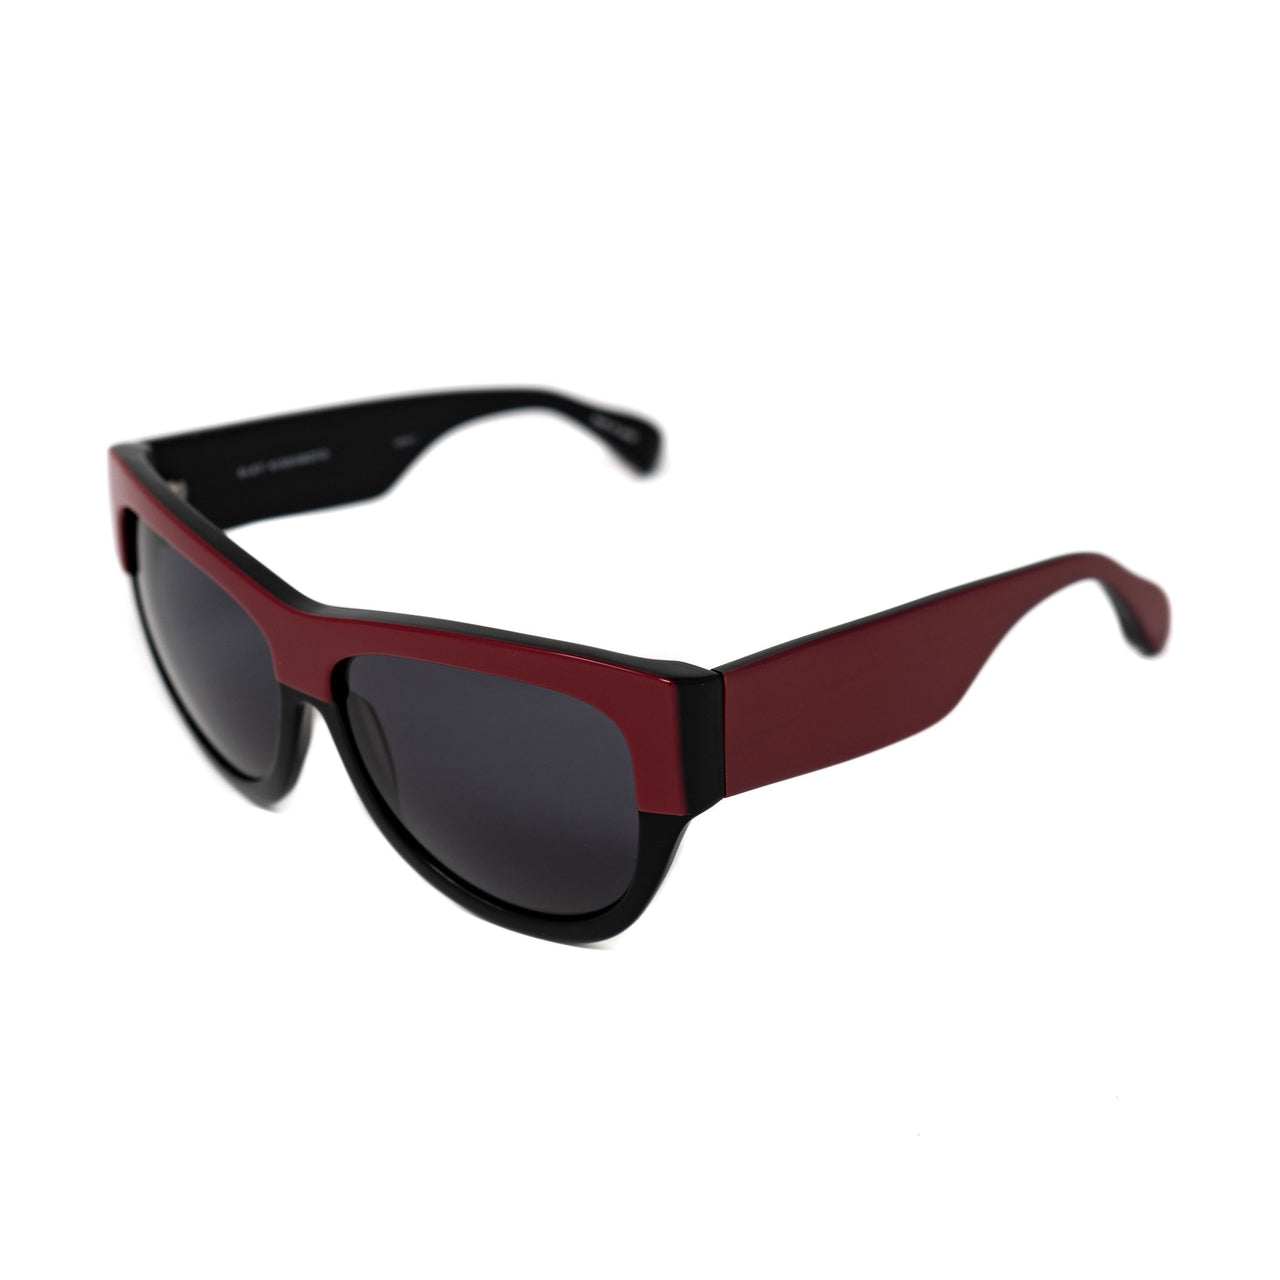 Eley Kishimoto Sunglasses Oversized Wayfarer Red and Black With Black Lenses EK26C1SUN - Watches & Crystals